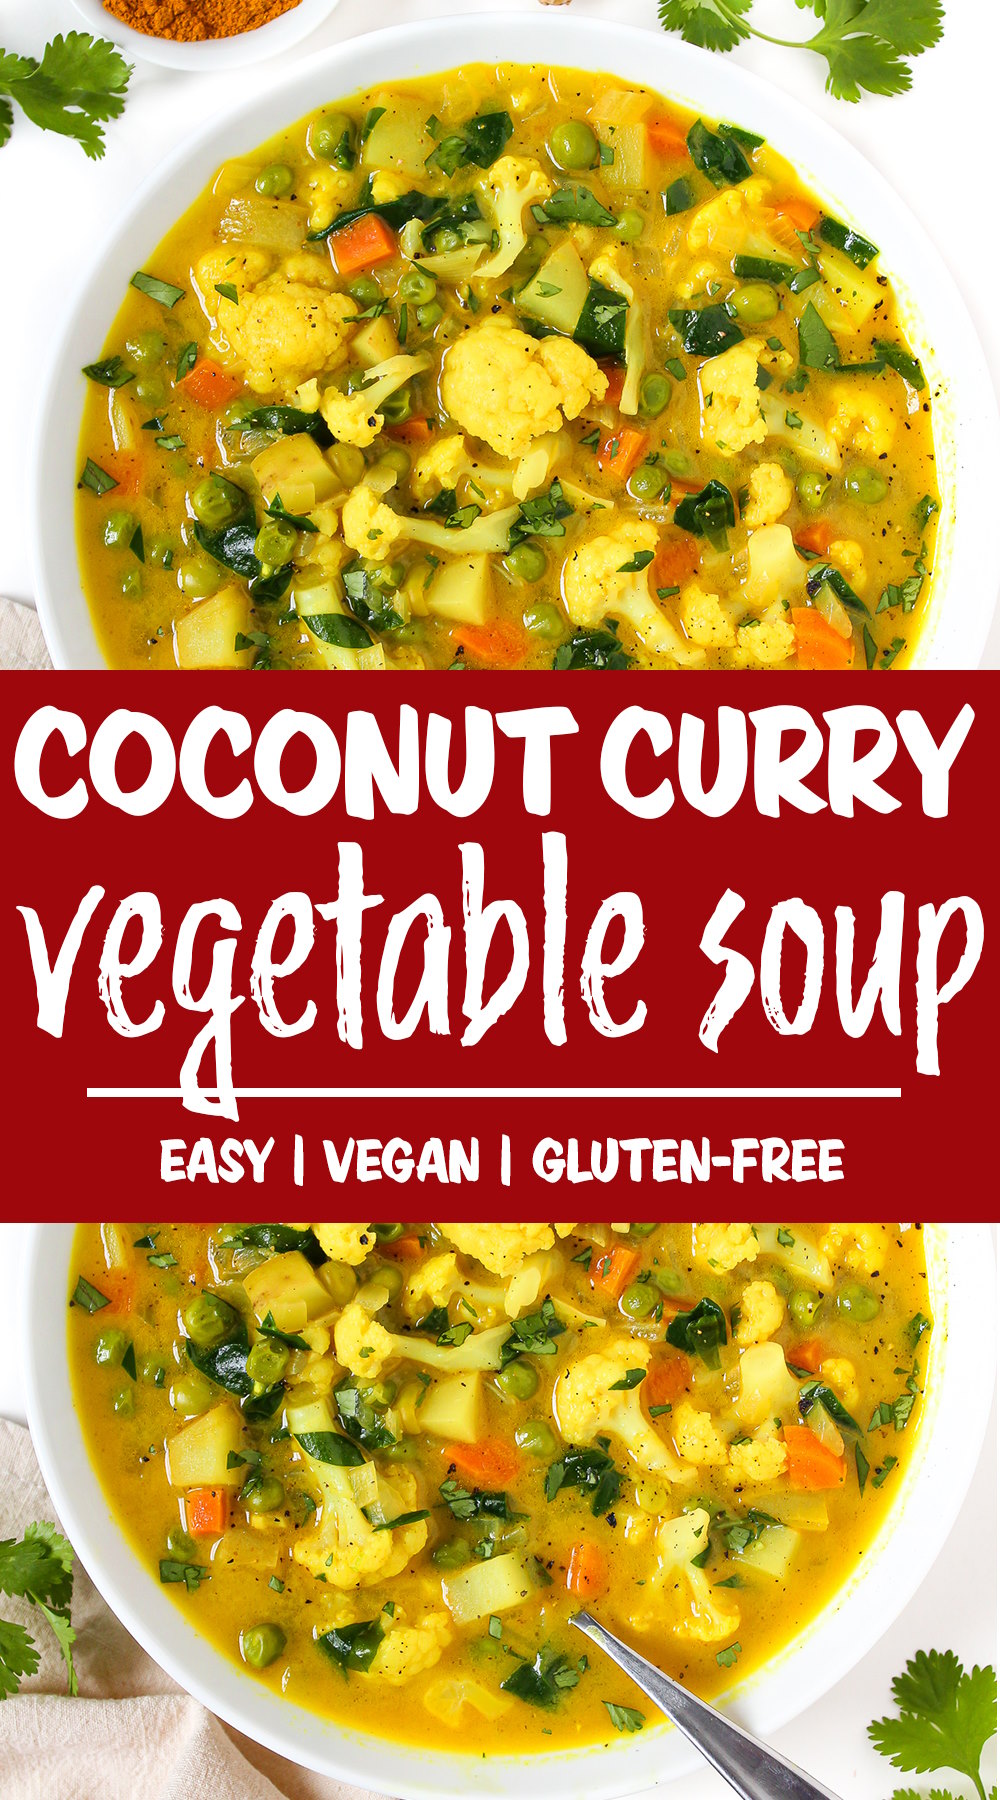 Coconut Curry Vegetable Soup (Vegan!) - The Garden Grazer